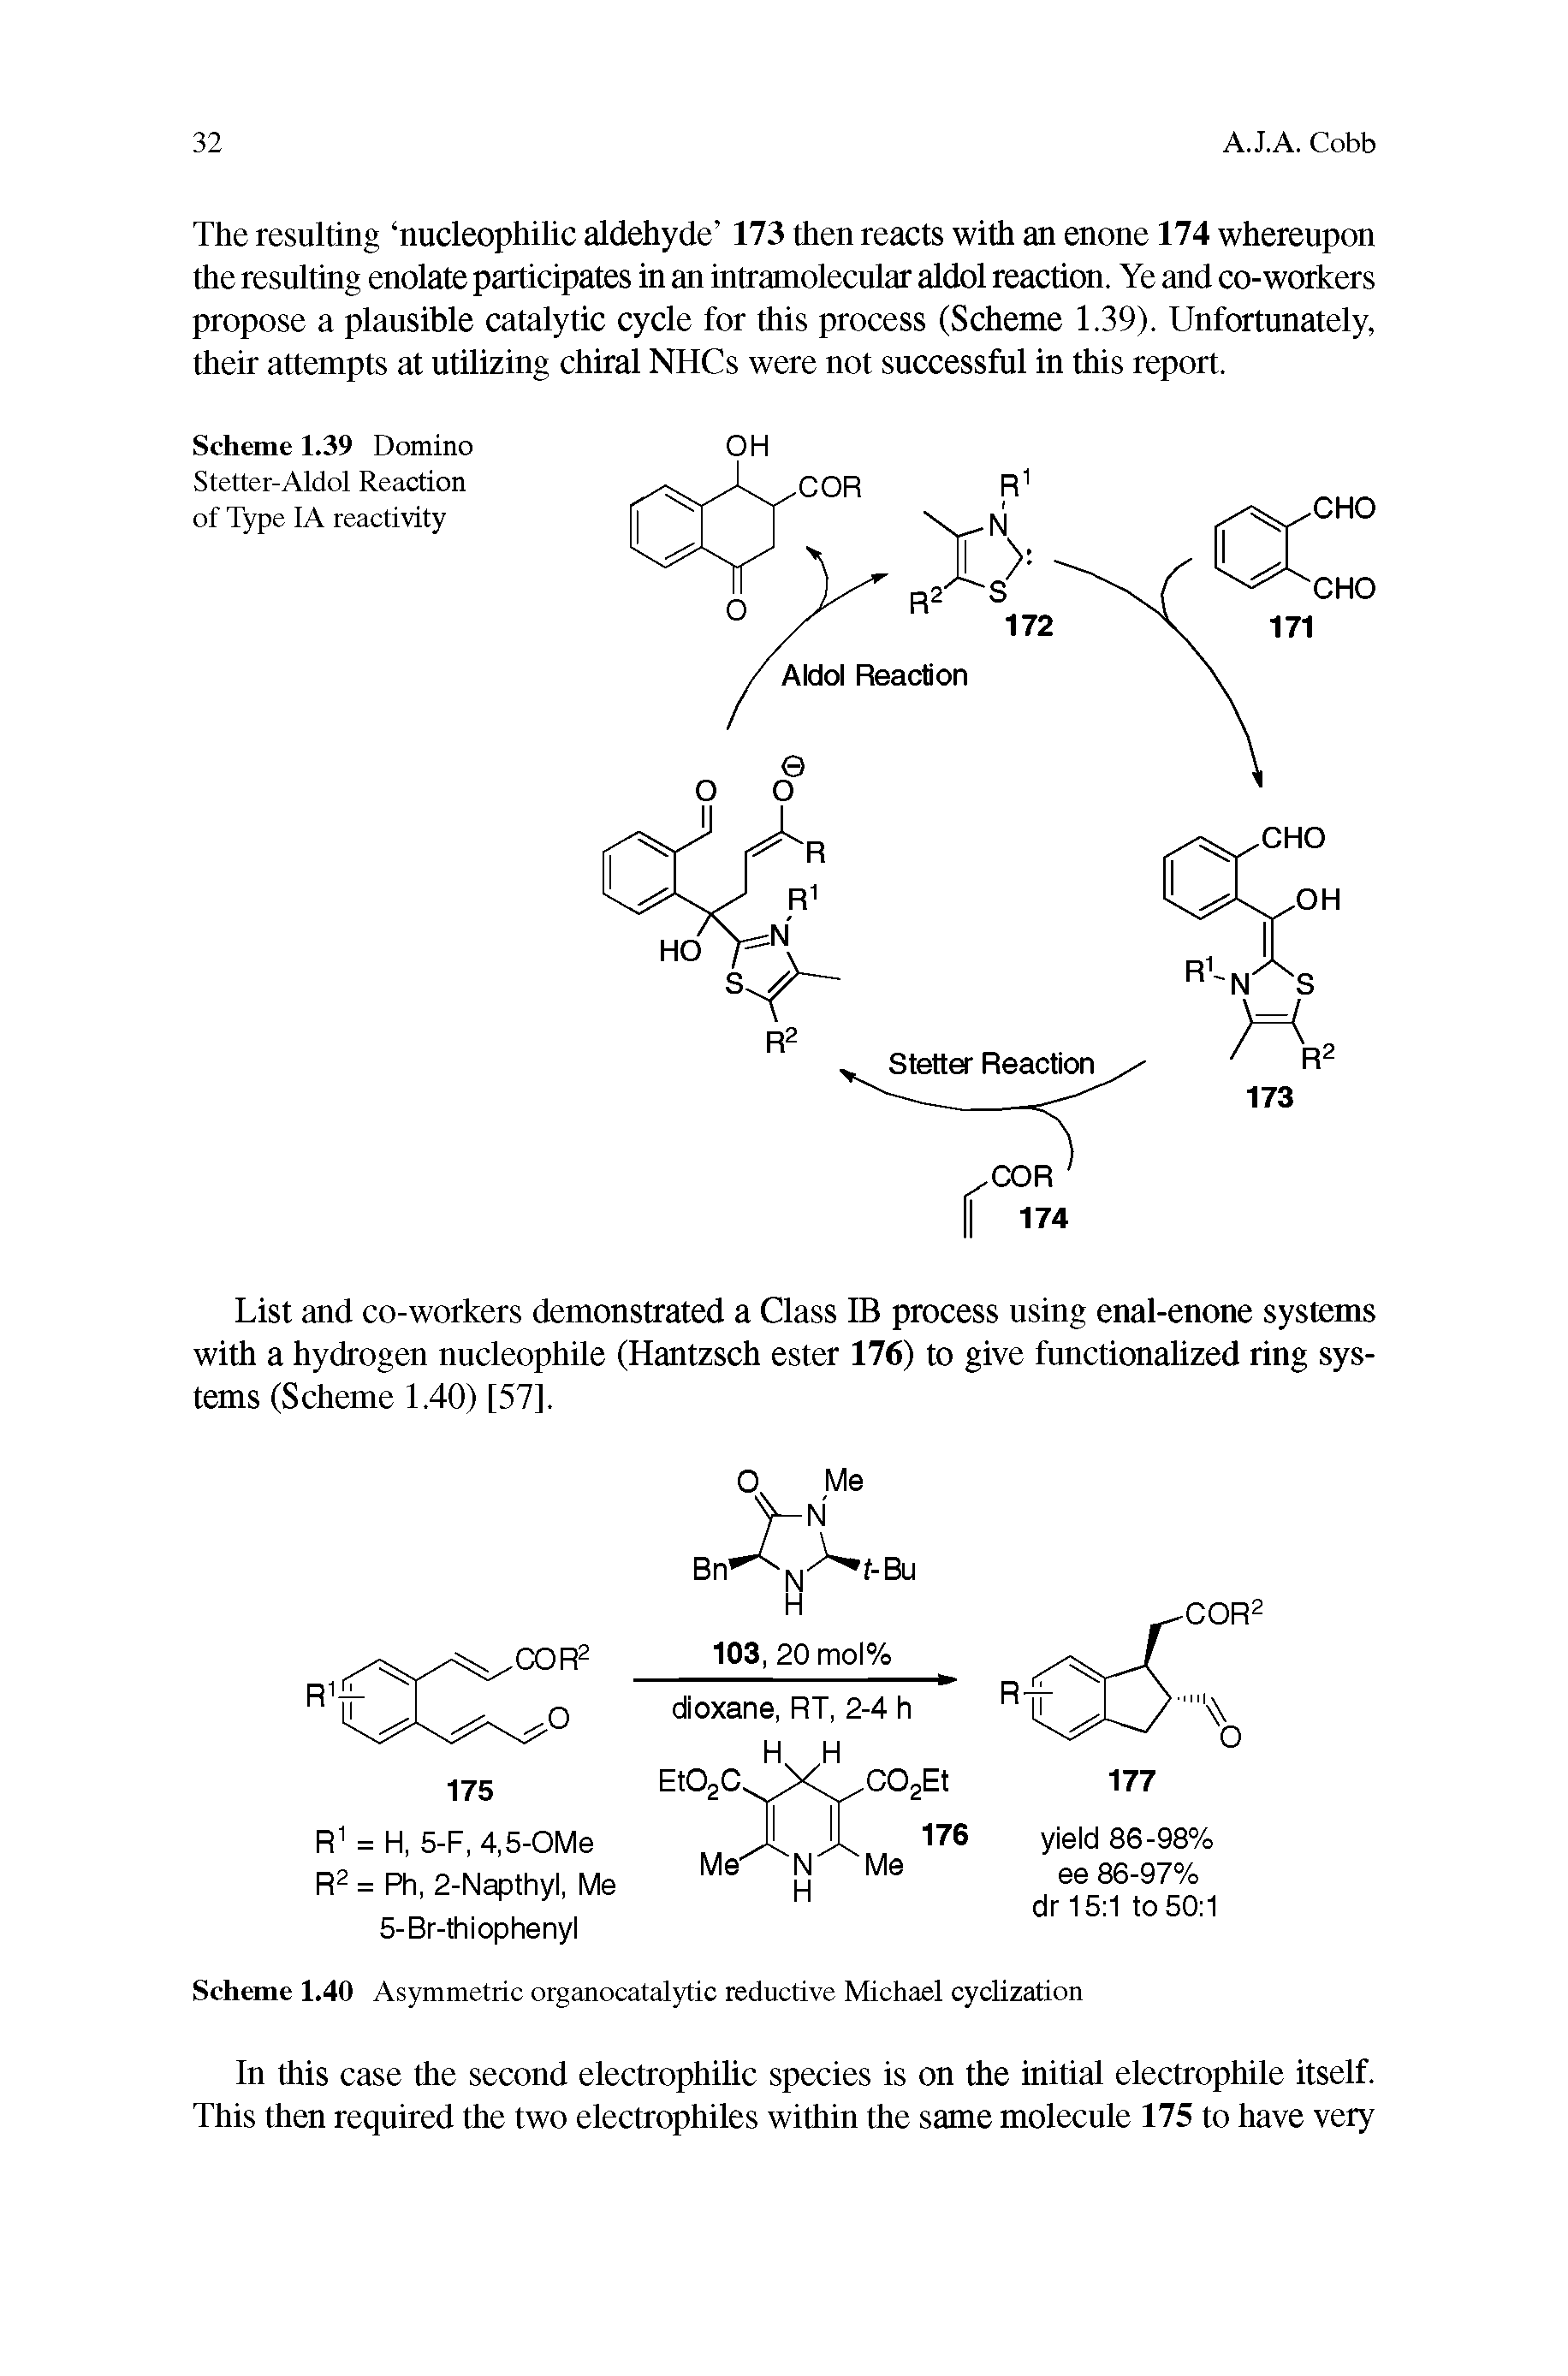 Scheme 1.40 Asymmetric organocatalytic reductive Michael cycUzation...